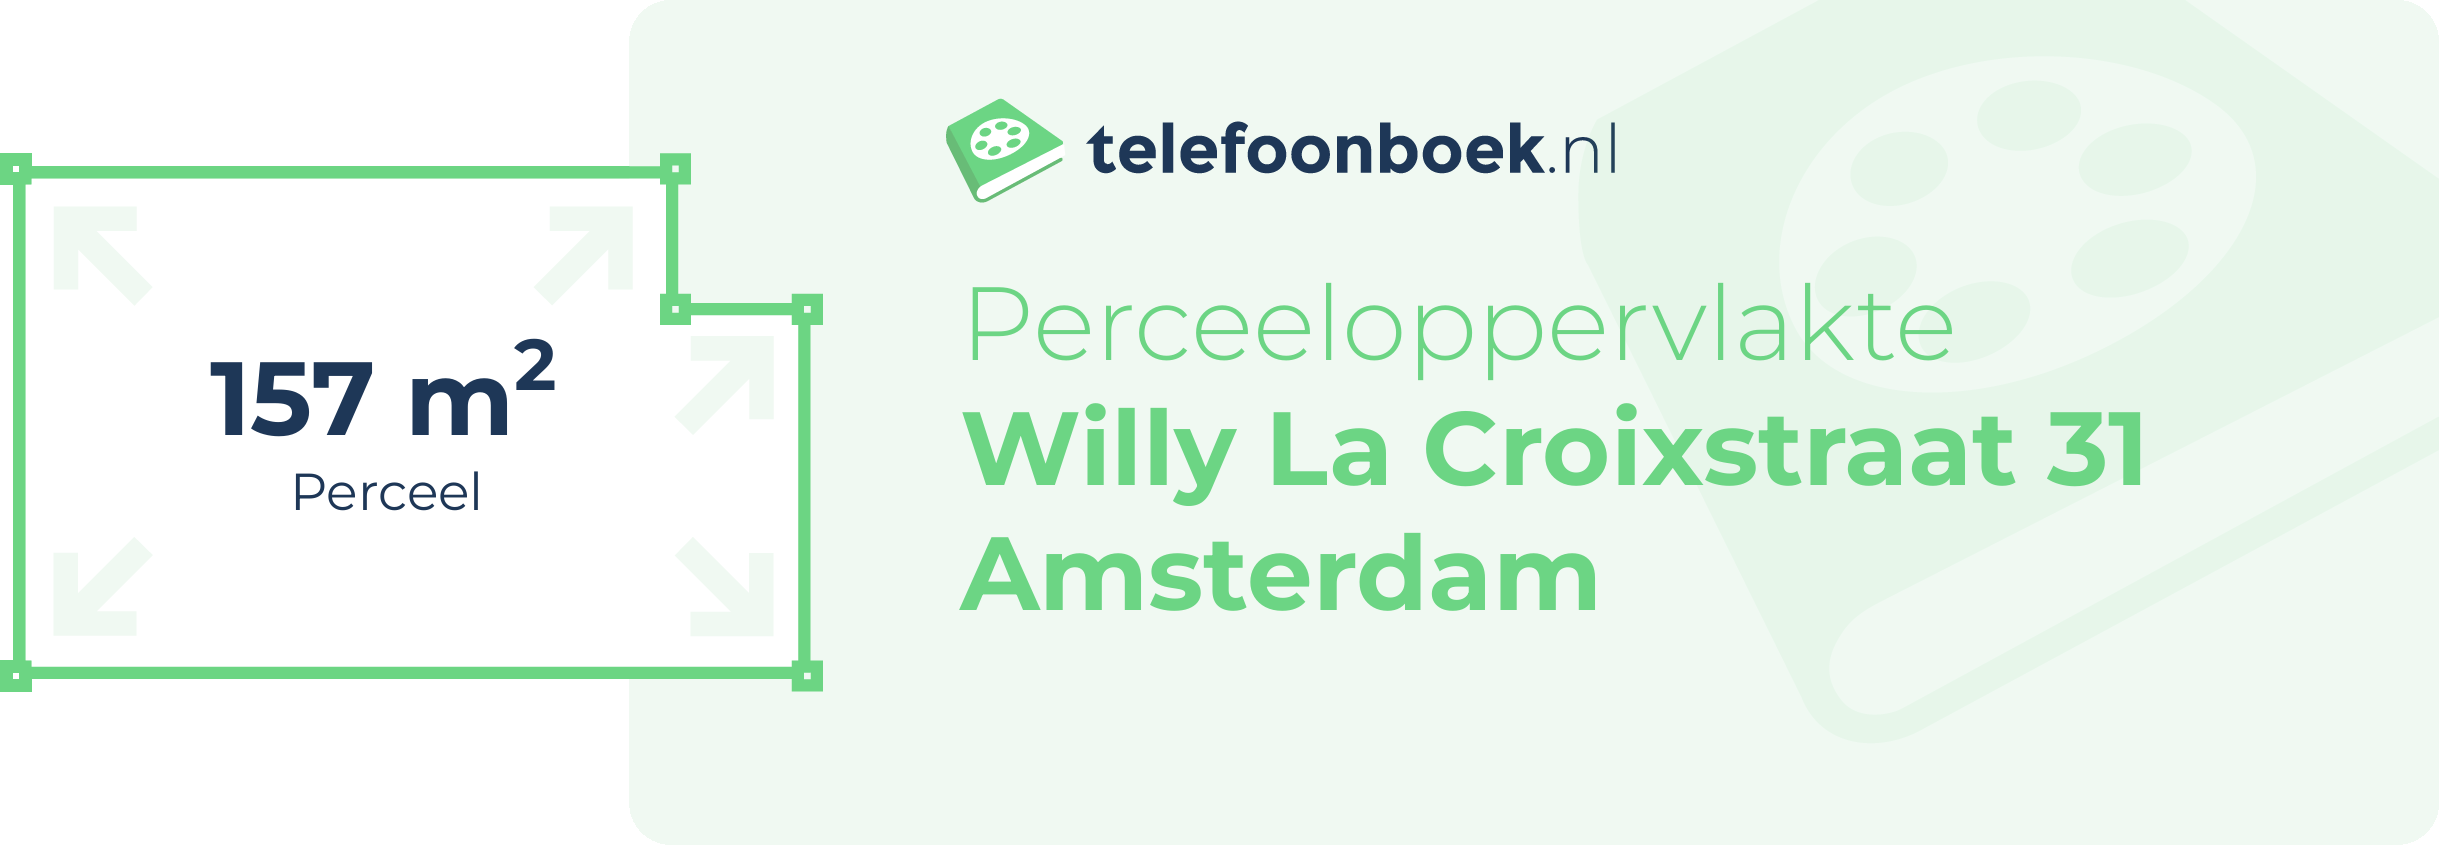 Perceeloppervlakte Willy La Croixstraat 31 Amsterdam